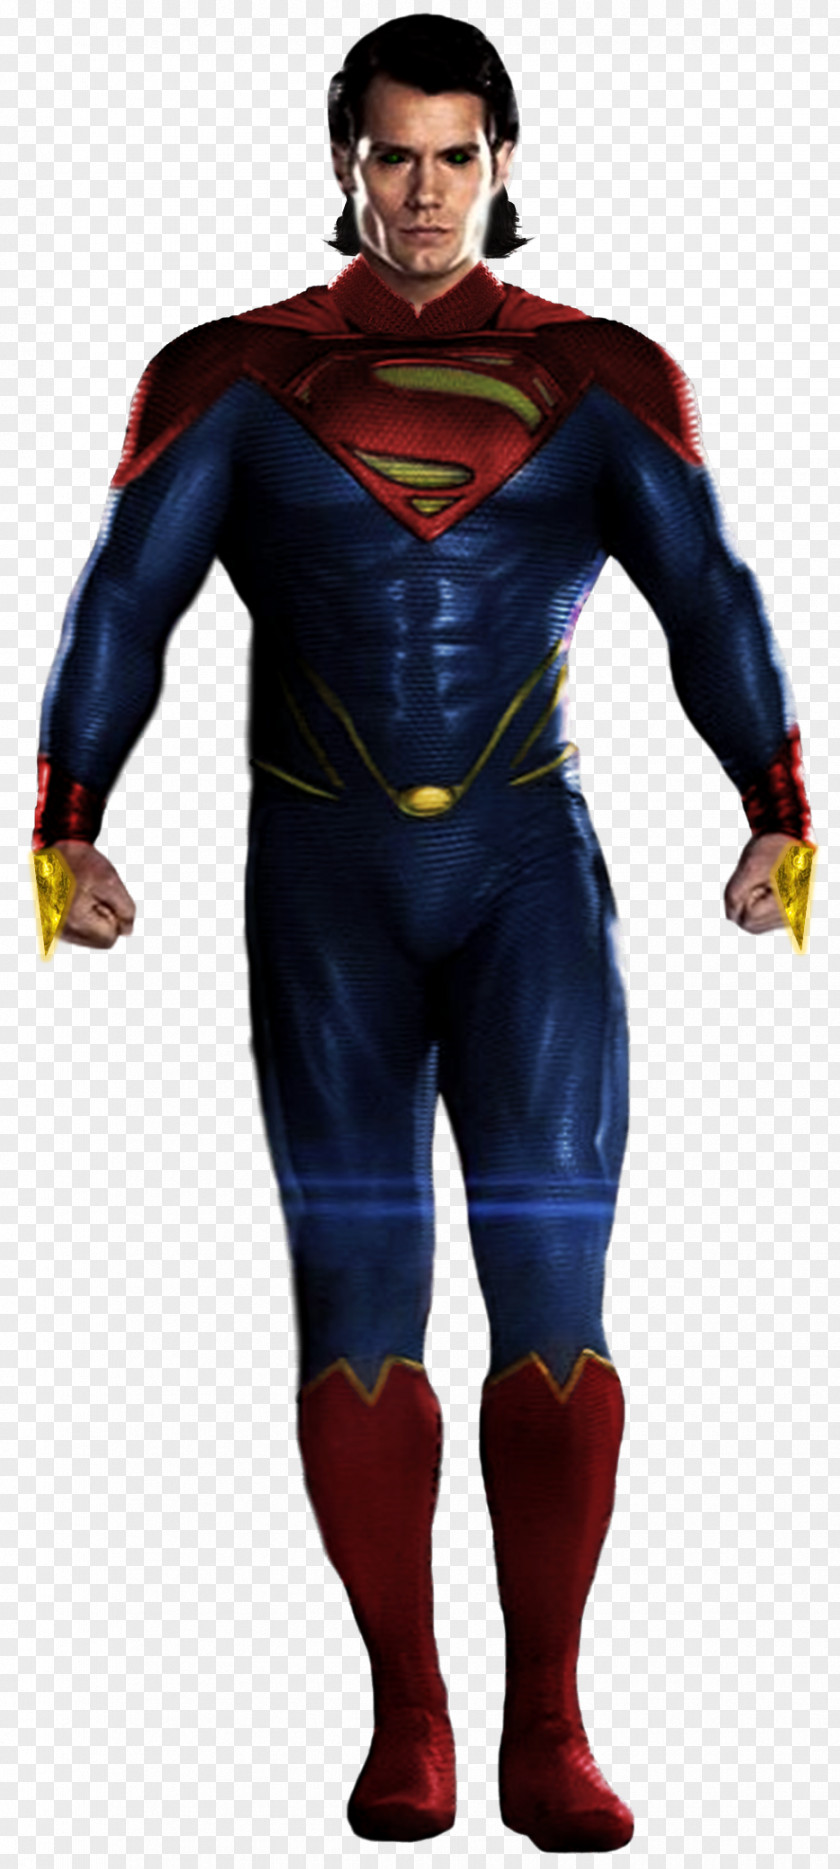 Batman V Superman Man Of Steel Supergirl Superhero PNG